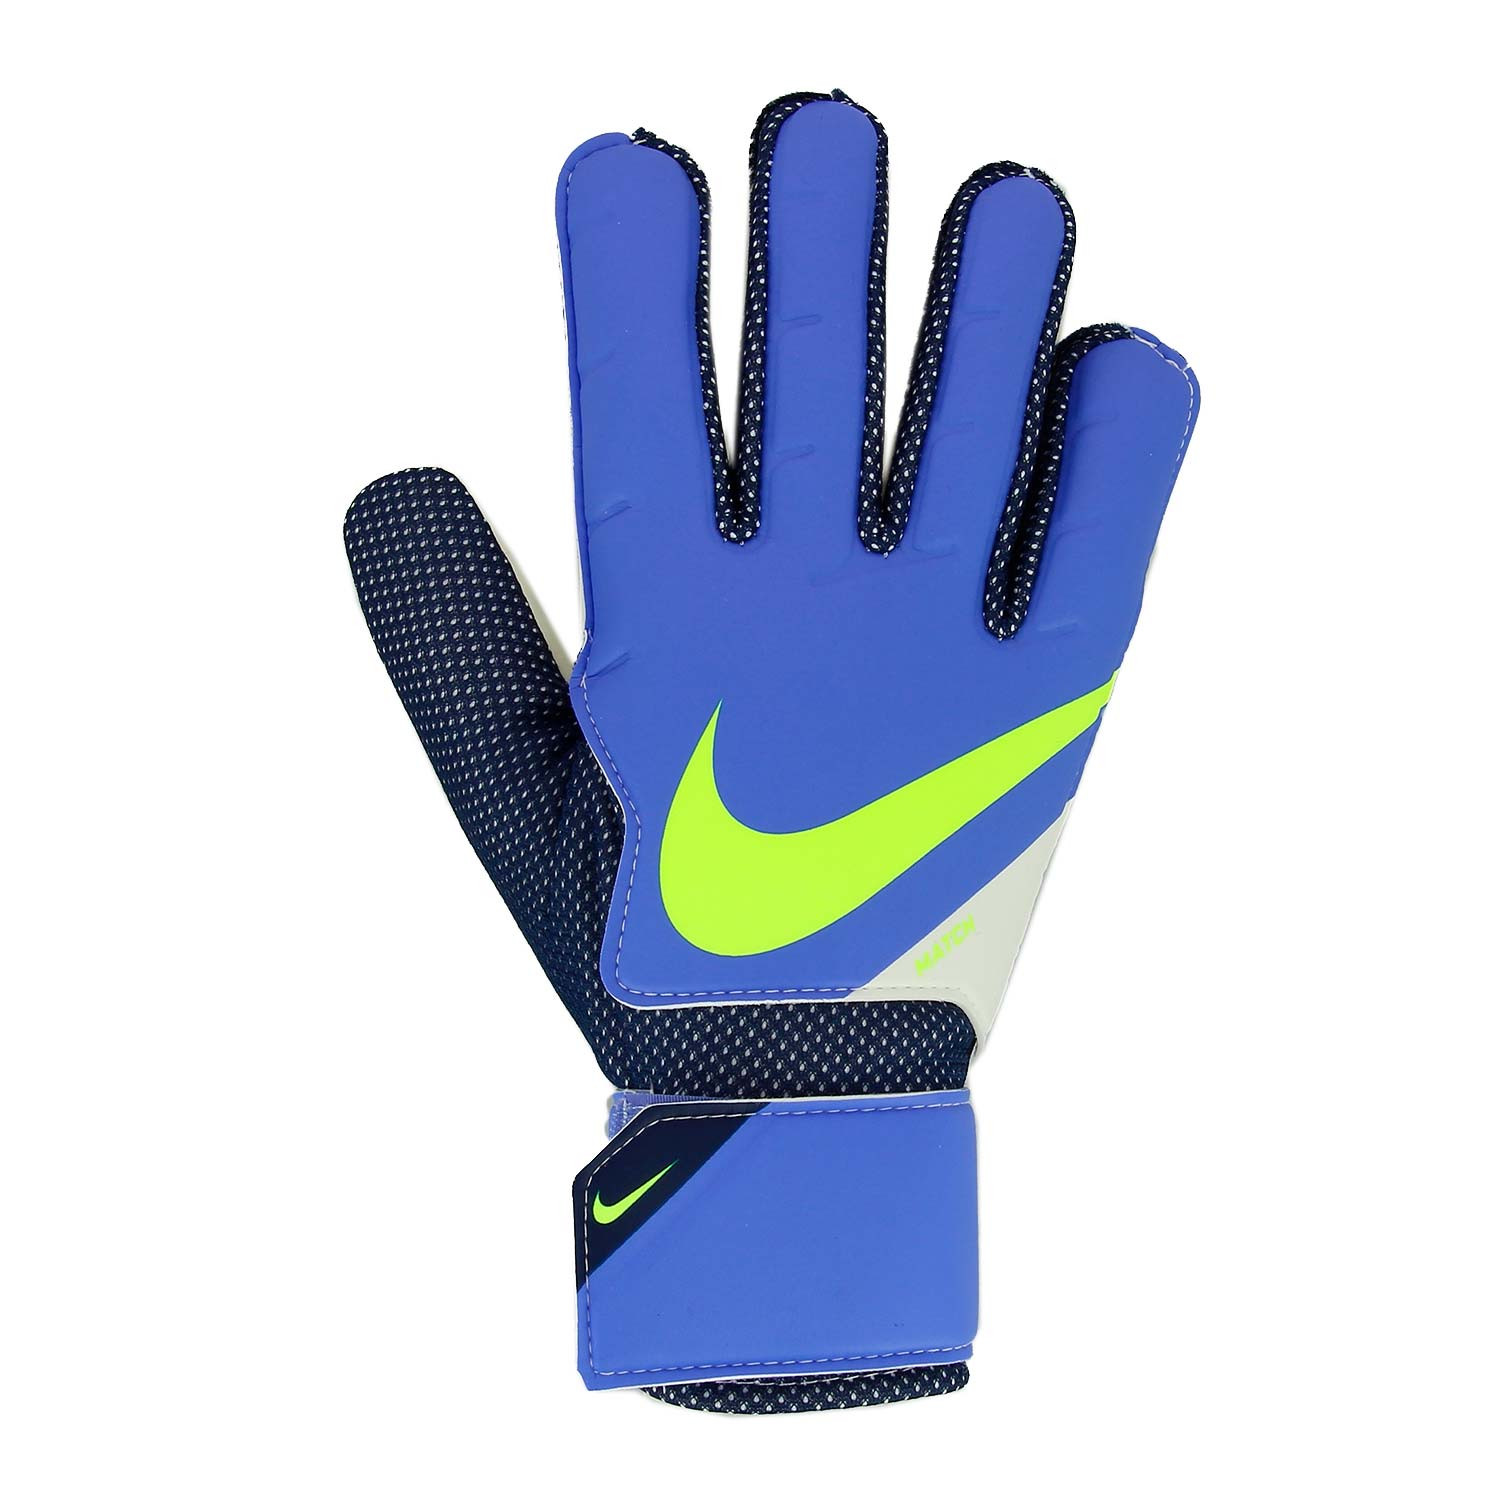 Nike lilas azulados | futbolmania